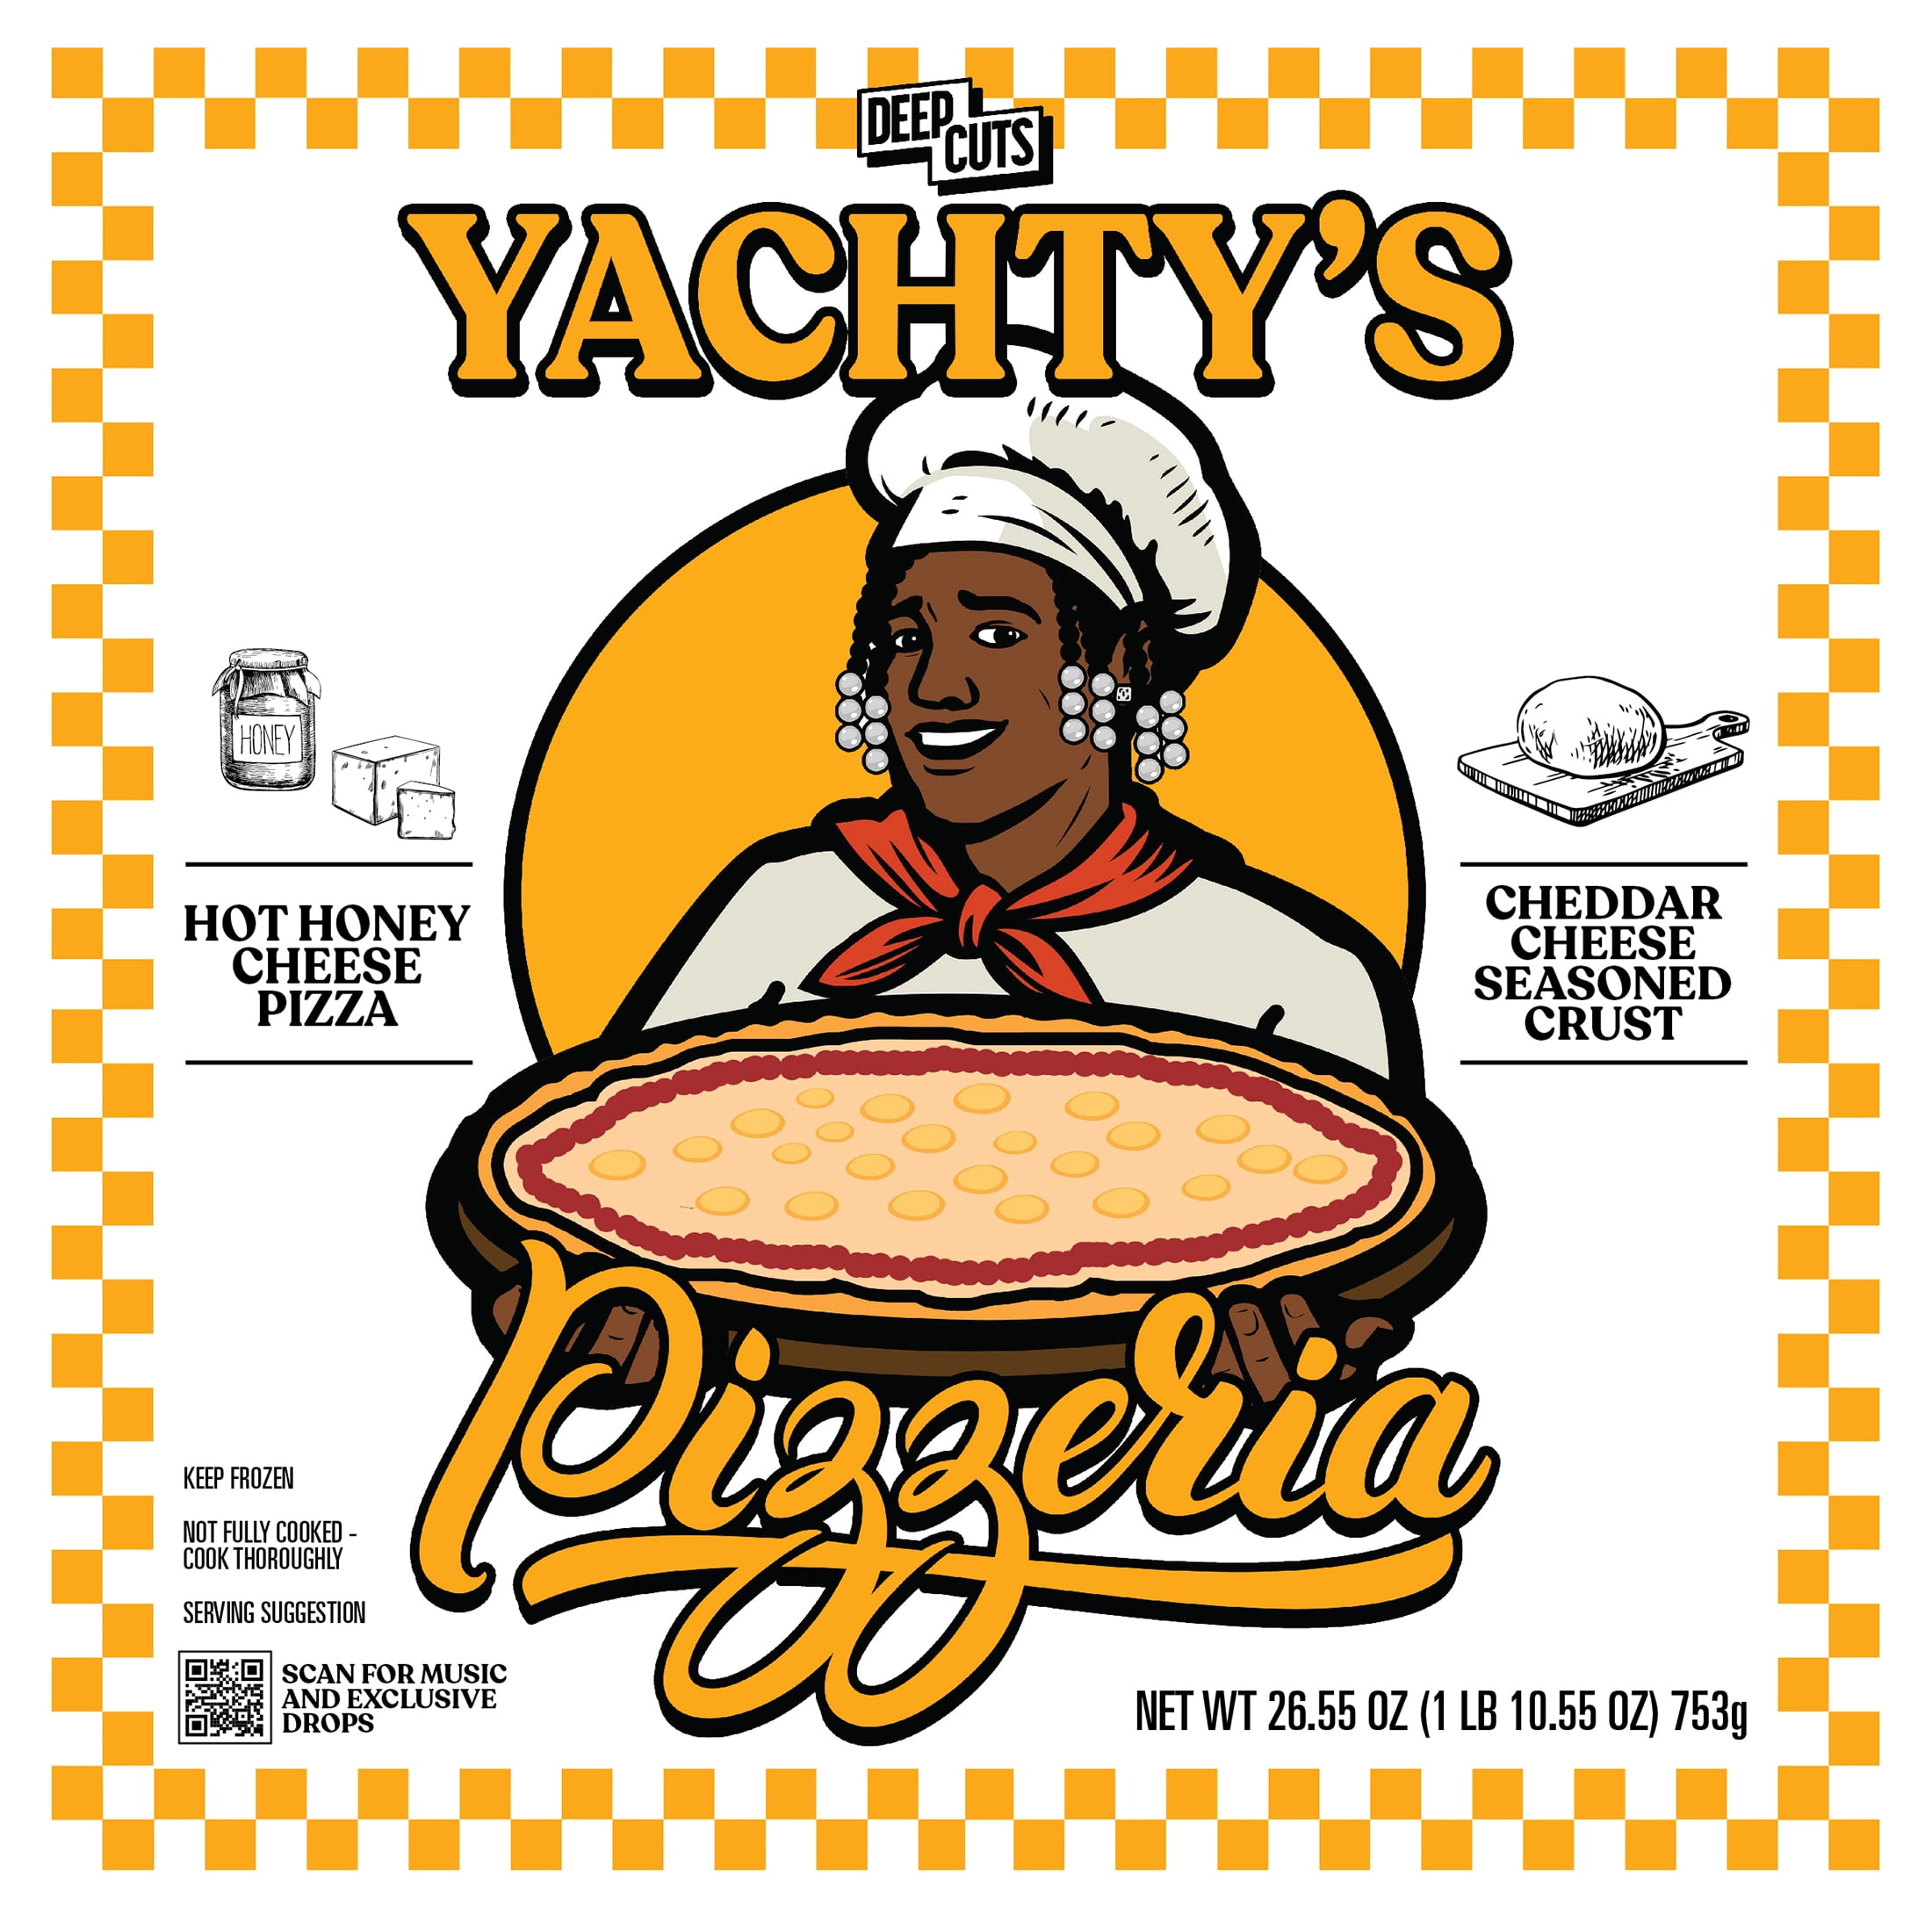 yachty's pizza near me